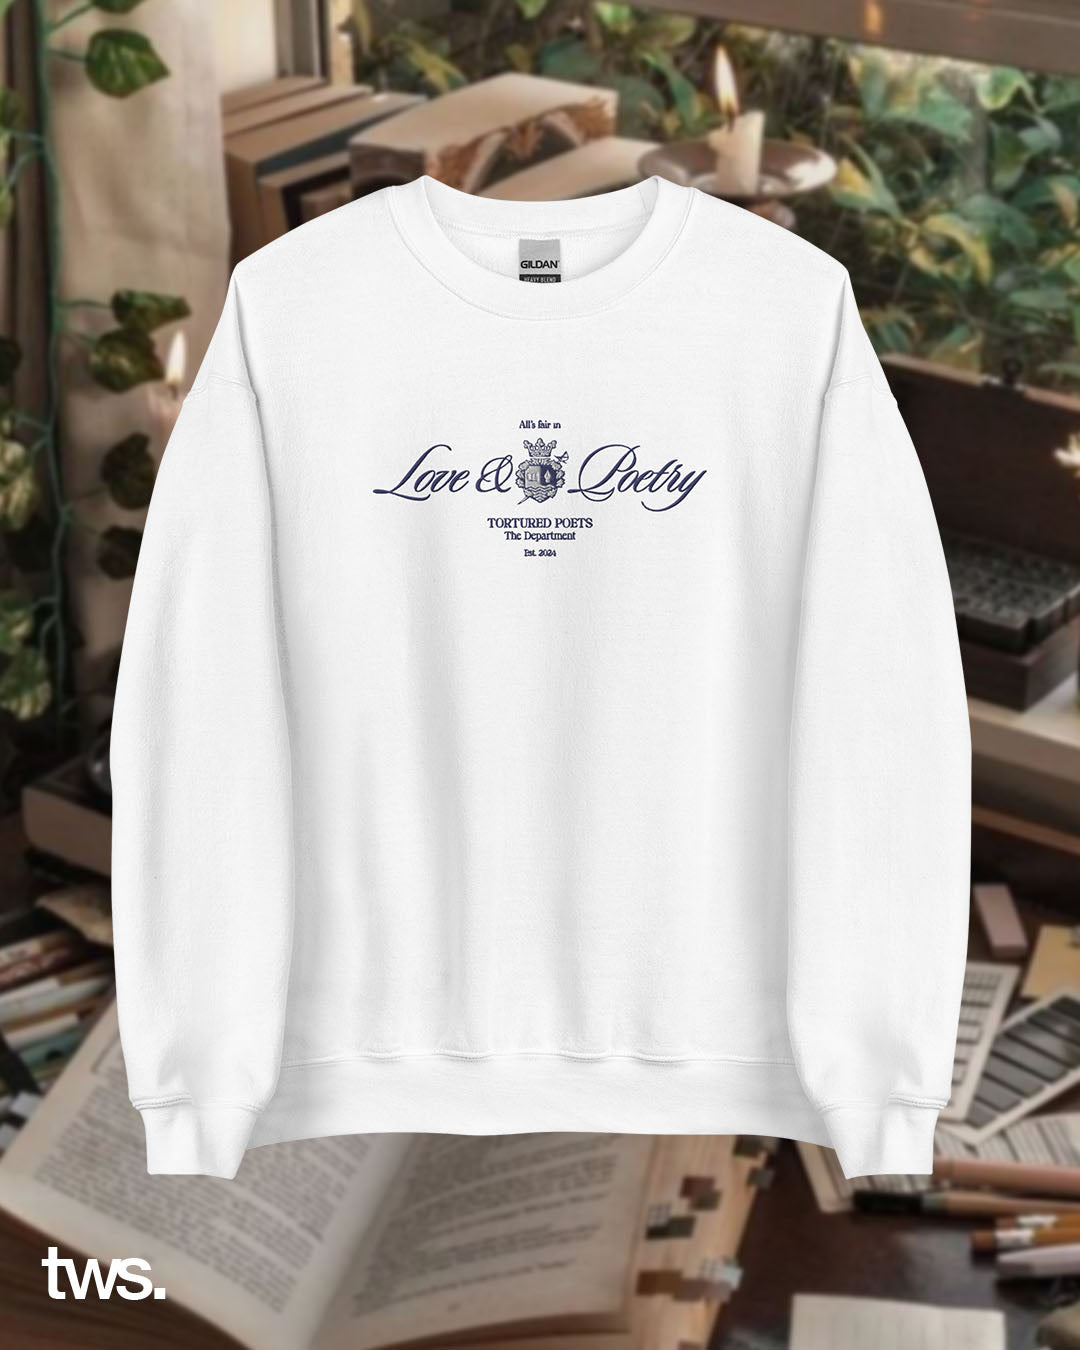 The Love Tee & Sweatshirt